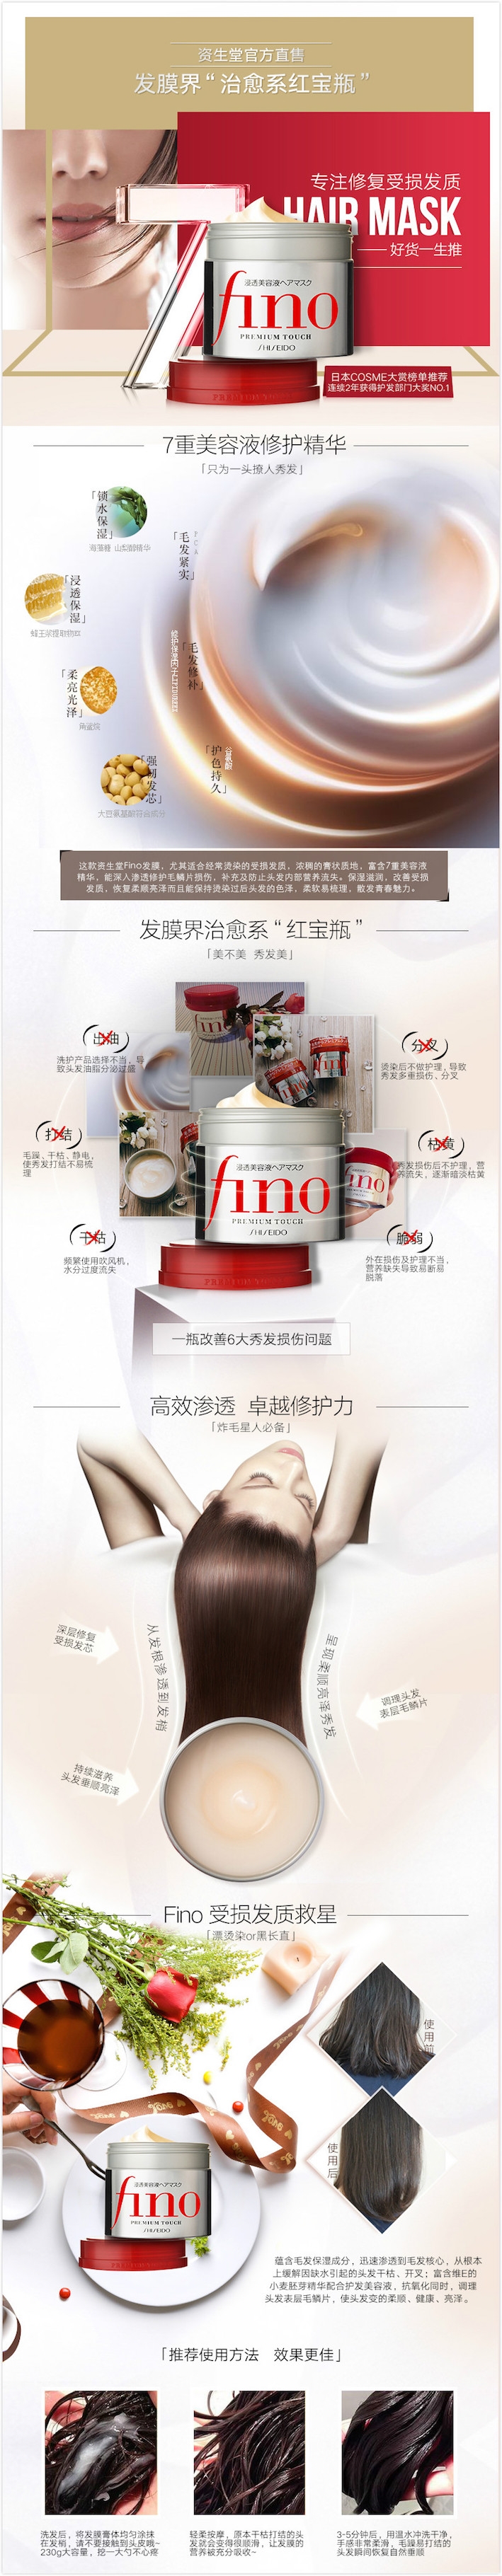 Shiseido - Masque de traitement capillaire Fino Premium Touch 230g X 3